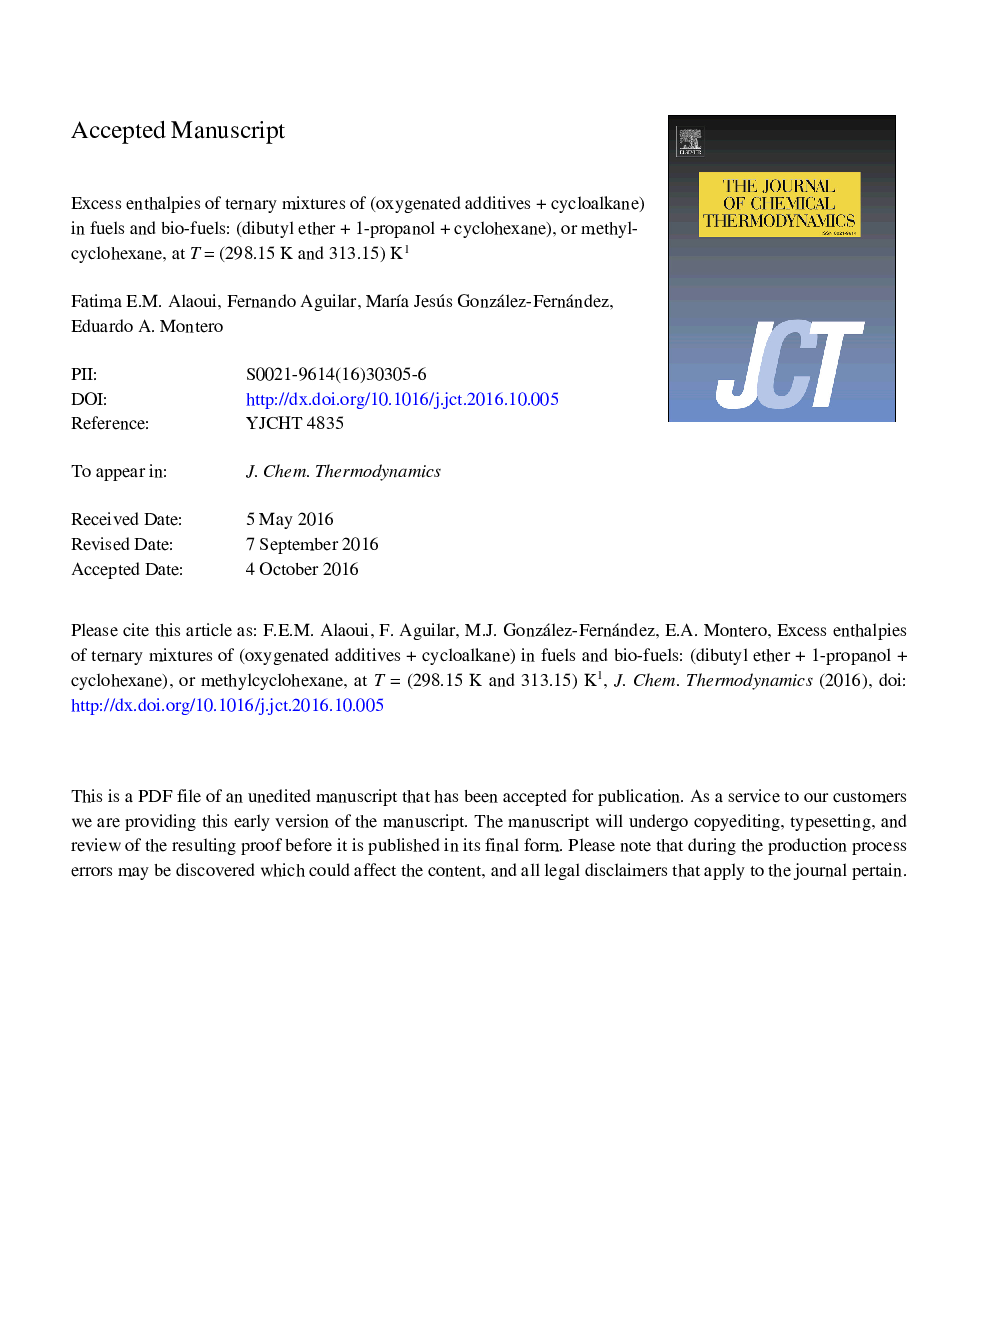 Excess enthalpies of ternary mixtures of (oxygenated additivesÂ +Â cycloalkane) in fuels and bio-fuels: (dibutyl etherÂ +Â 1-propanolÂ +Â cyclohexane), or methylcyclohexane, at TÂ =Â (298.15 and 313.15)Â K